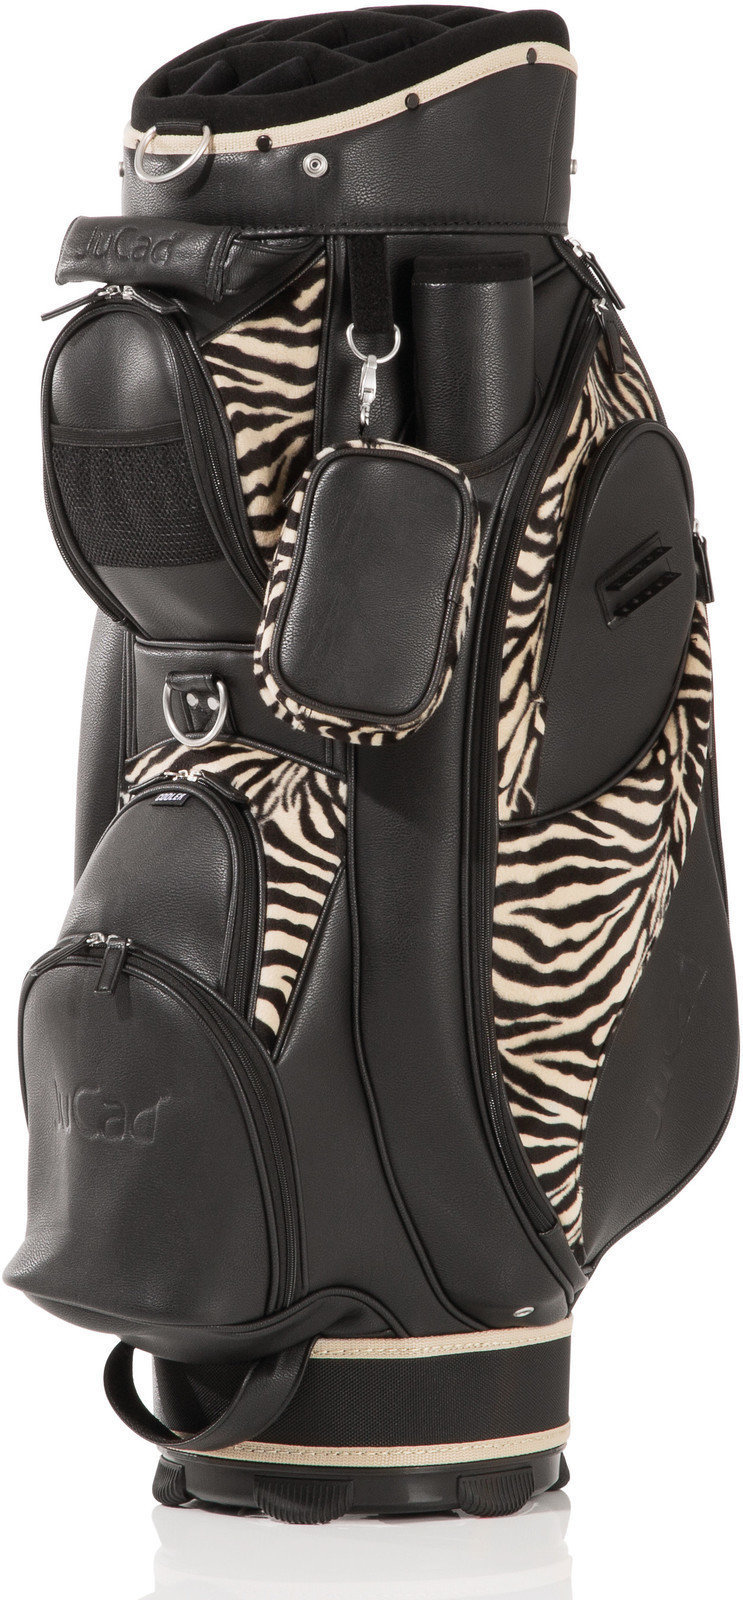 Golf torba Jucad Style Black/Zebra Cart Bag